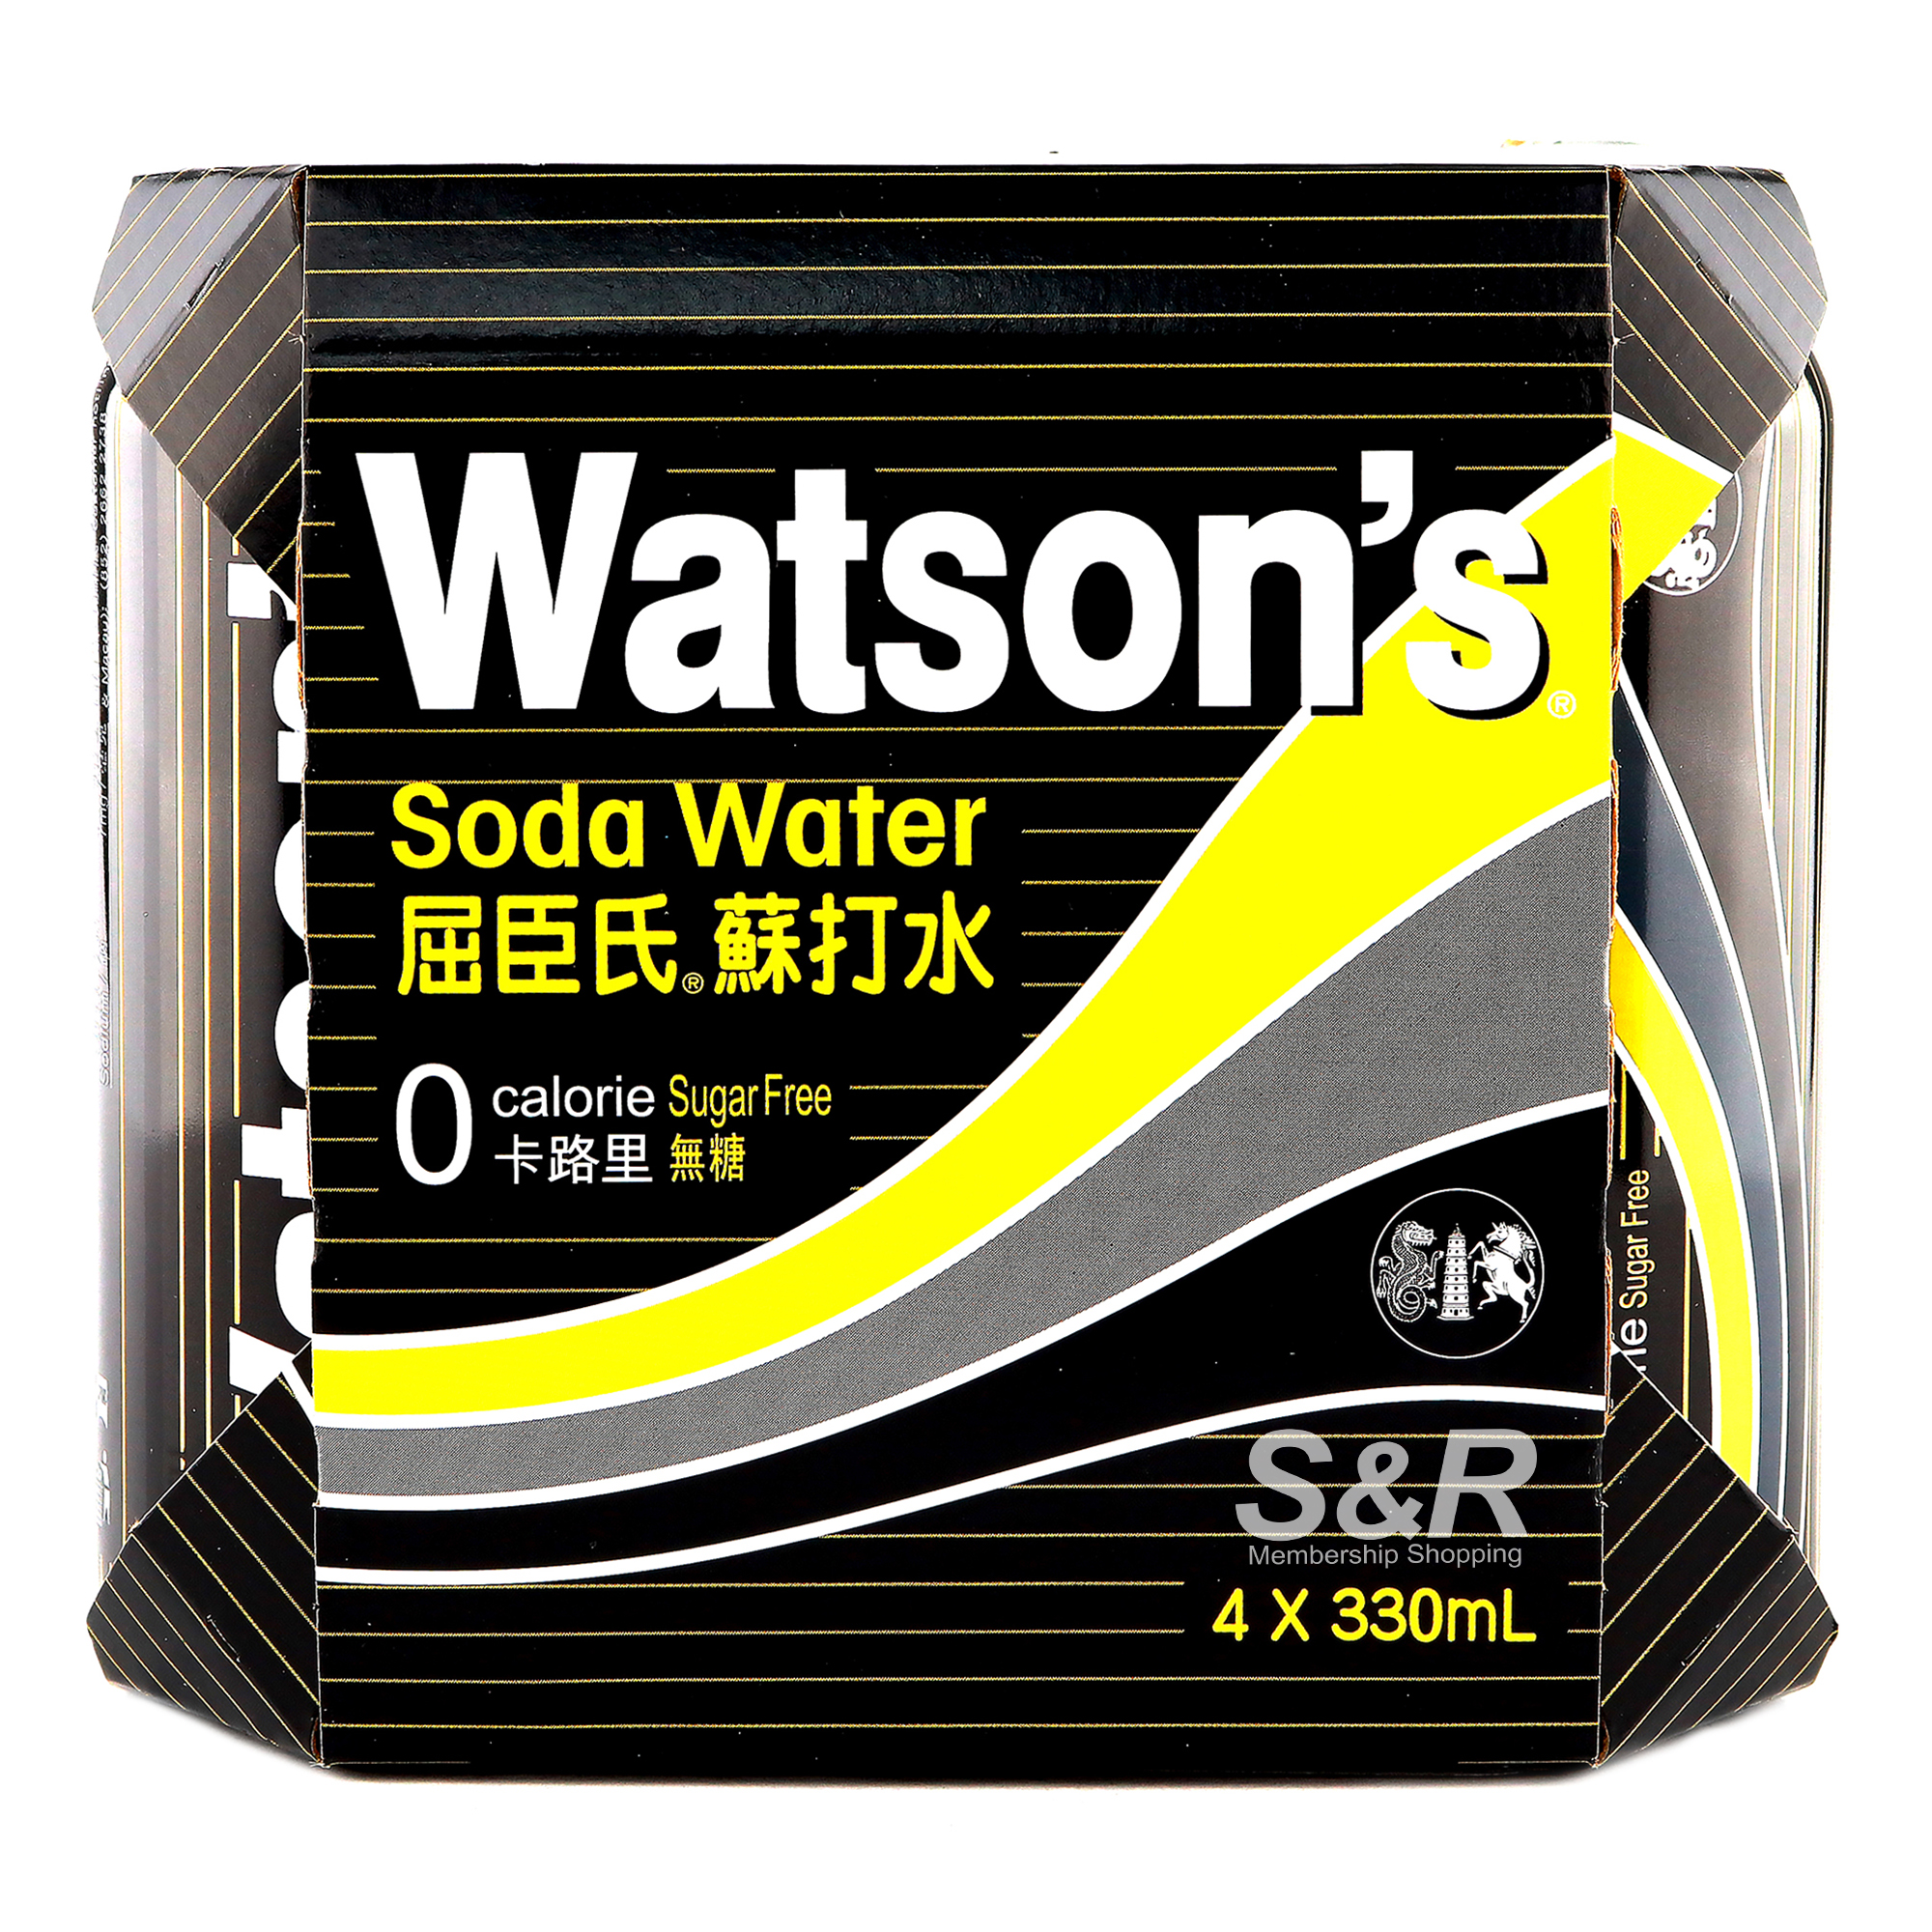 Watson's Soda Water 4 cans